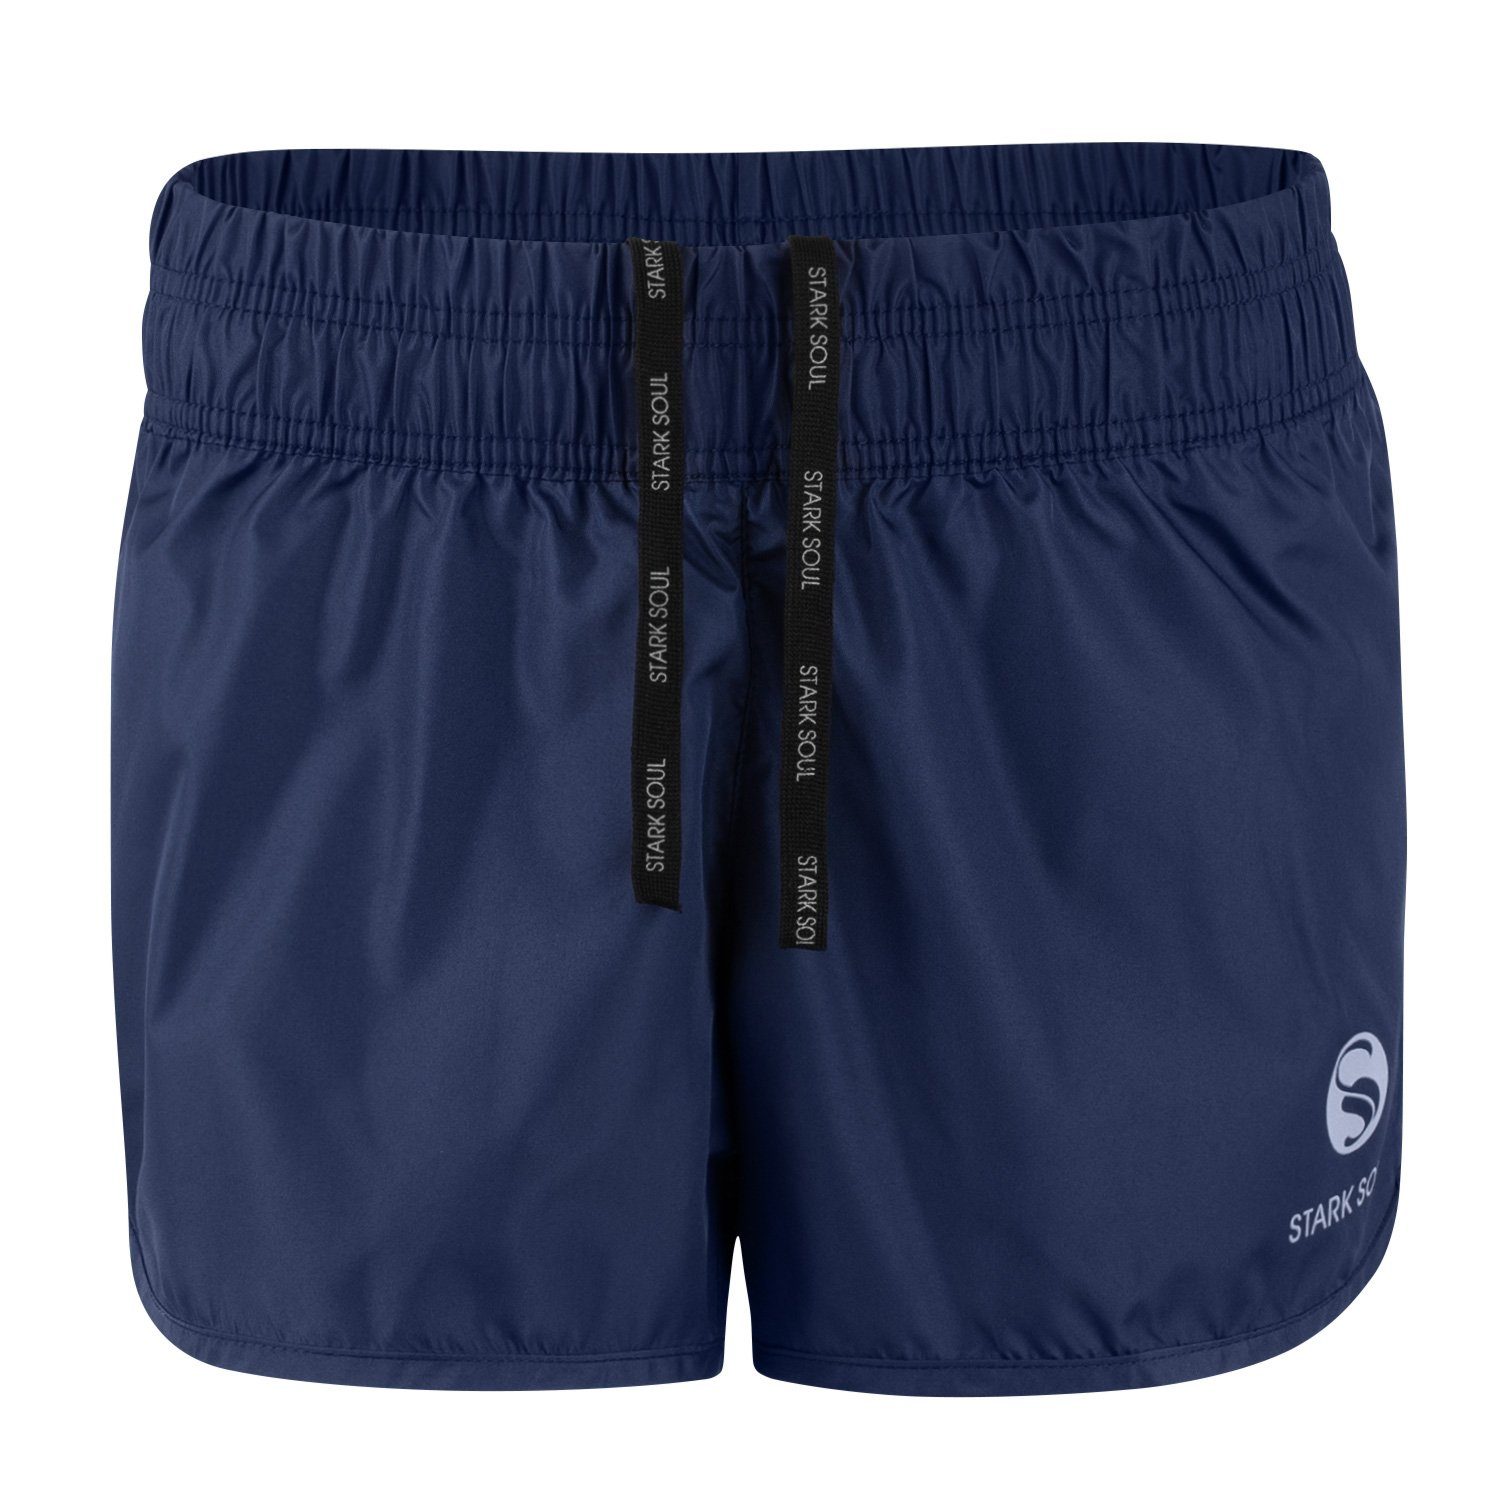 Stark Soul® Sporthose Sport Short - kurze Sporthose aus Quick Dry Material - Schnelltrocknend Marineblau